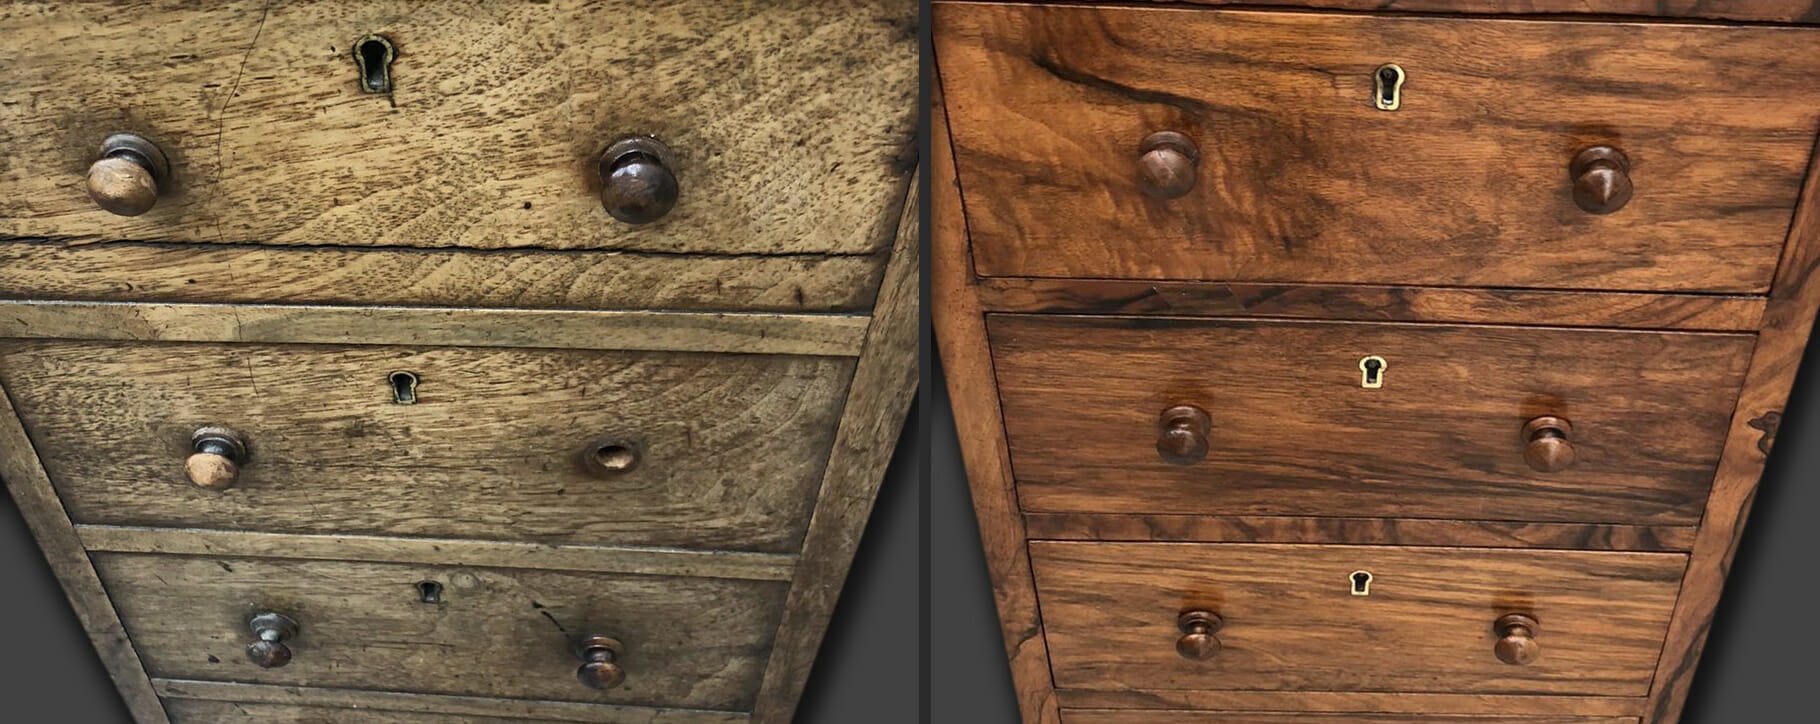 Davenport drawers restored